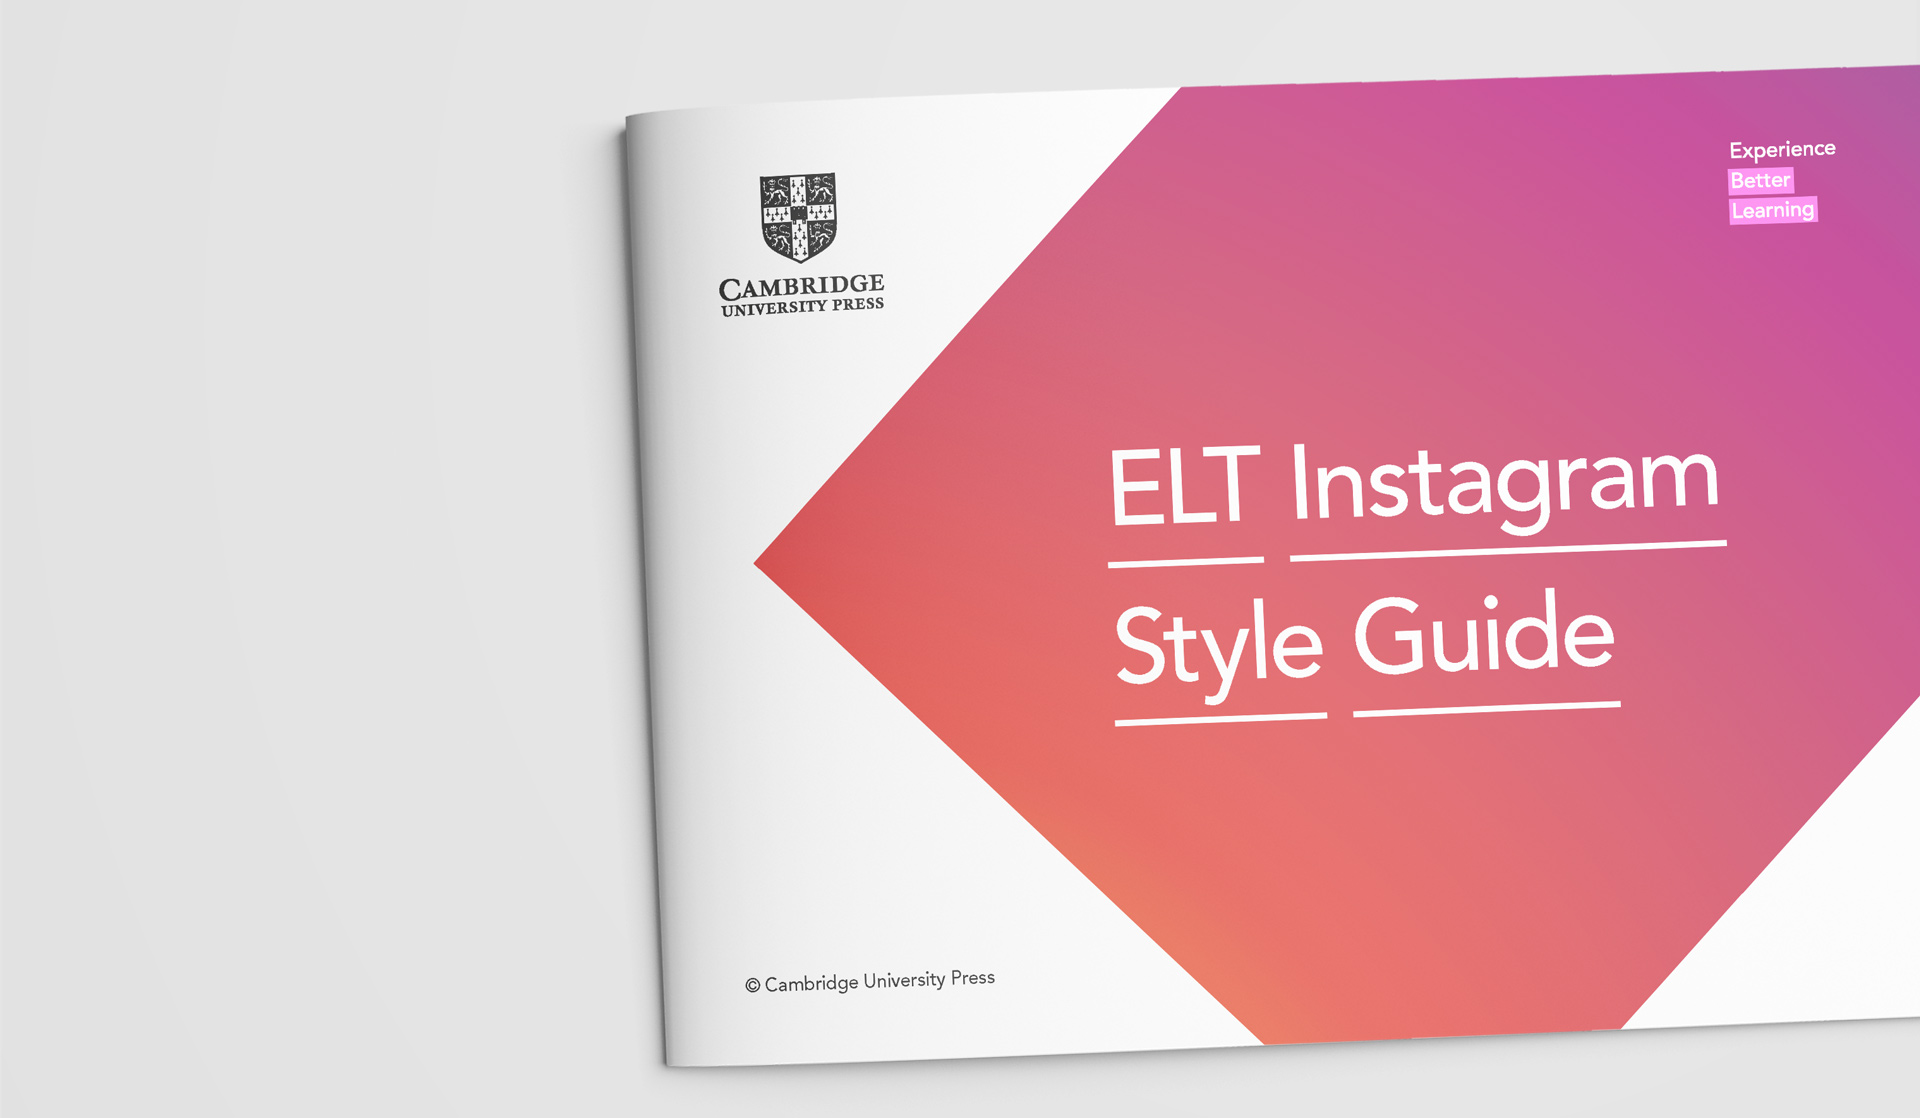 Cambridg University Press ELT Instagram Style Guide